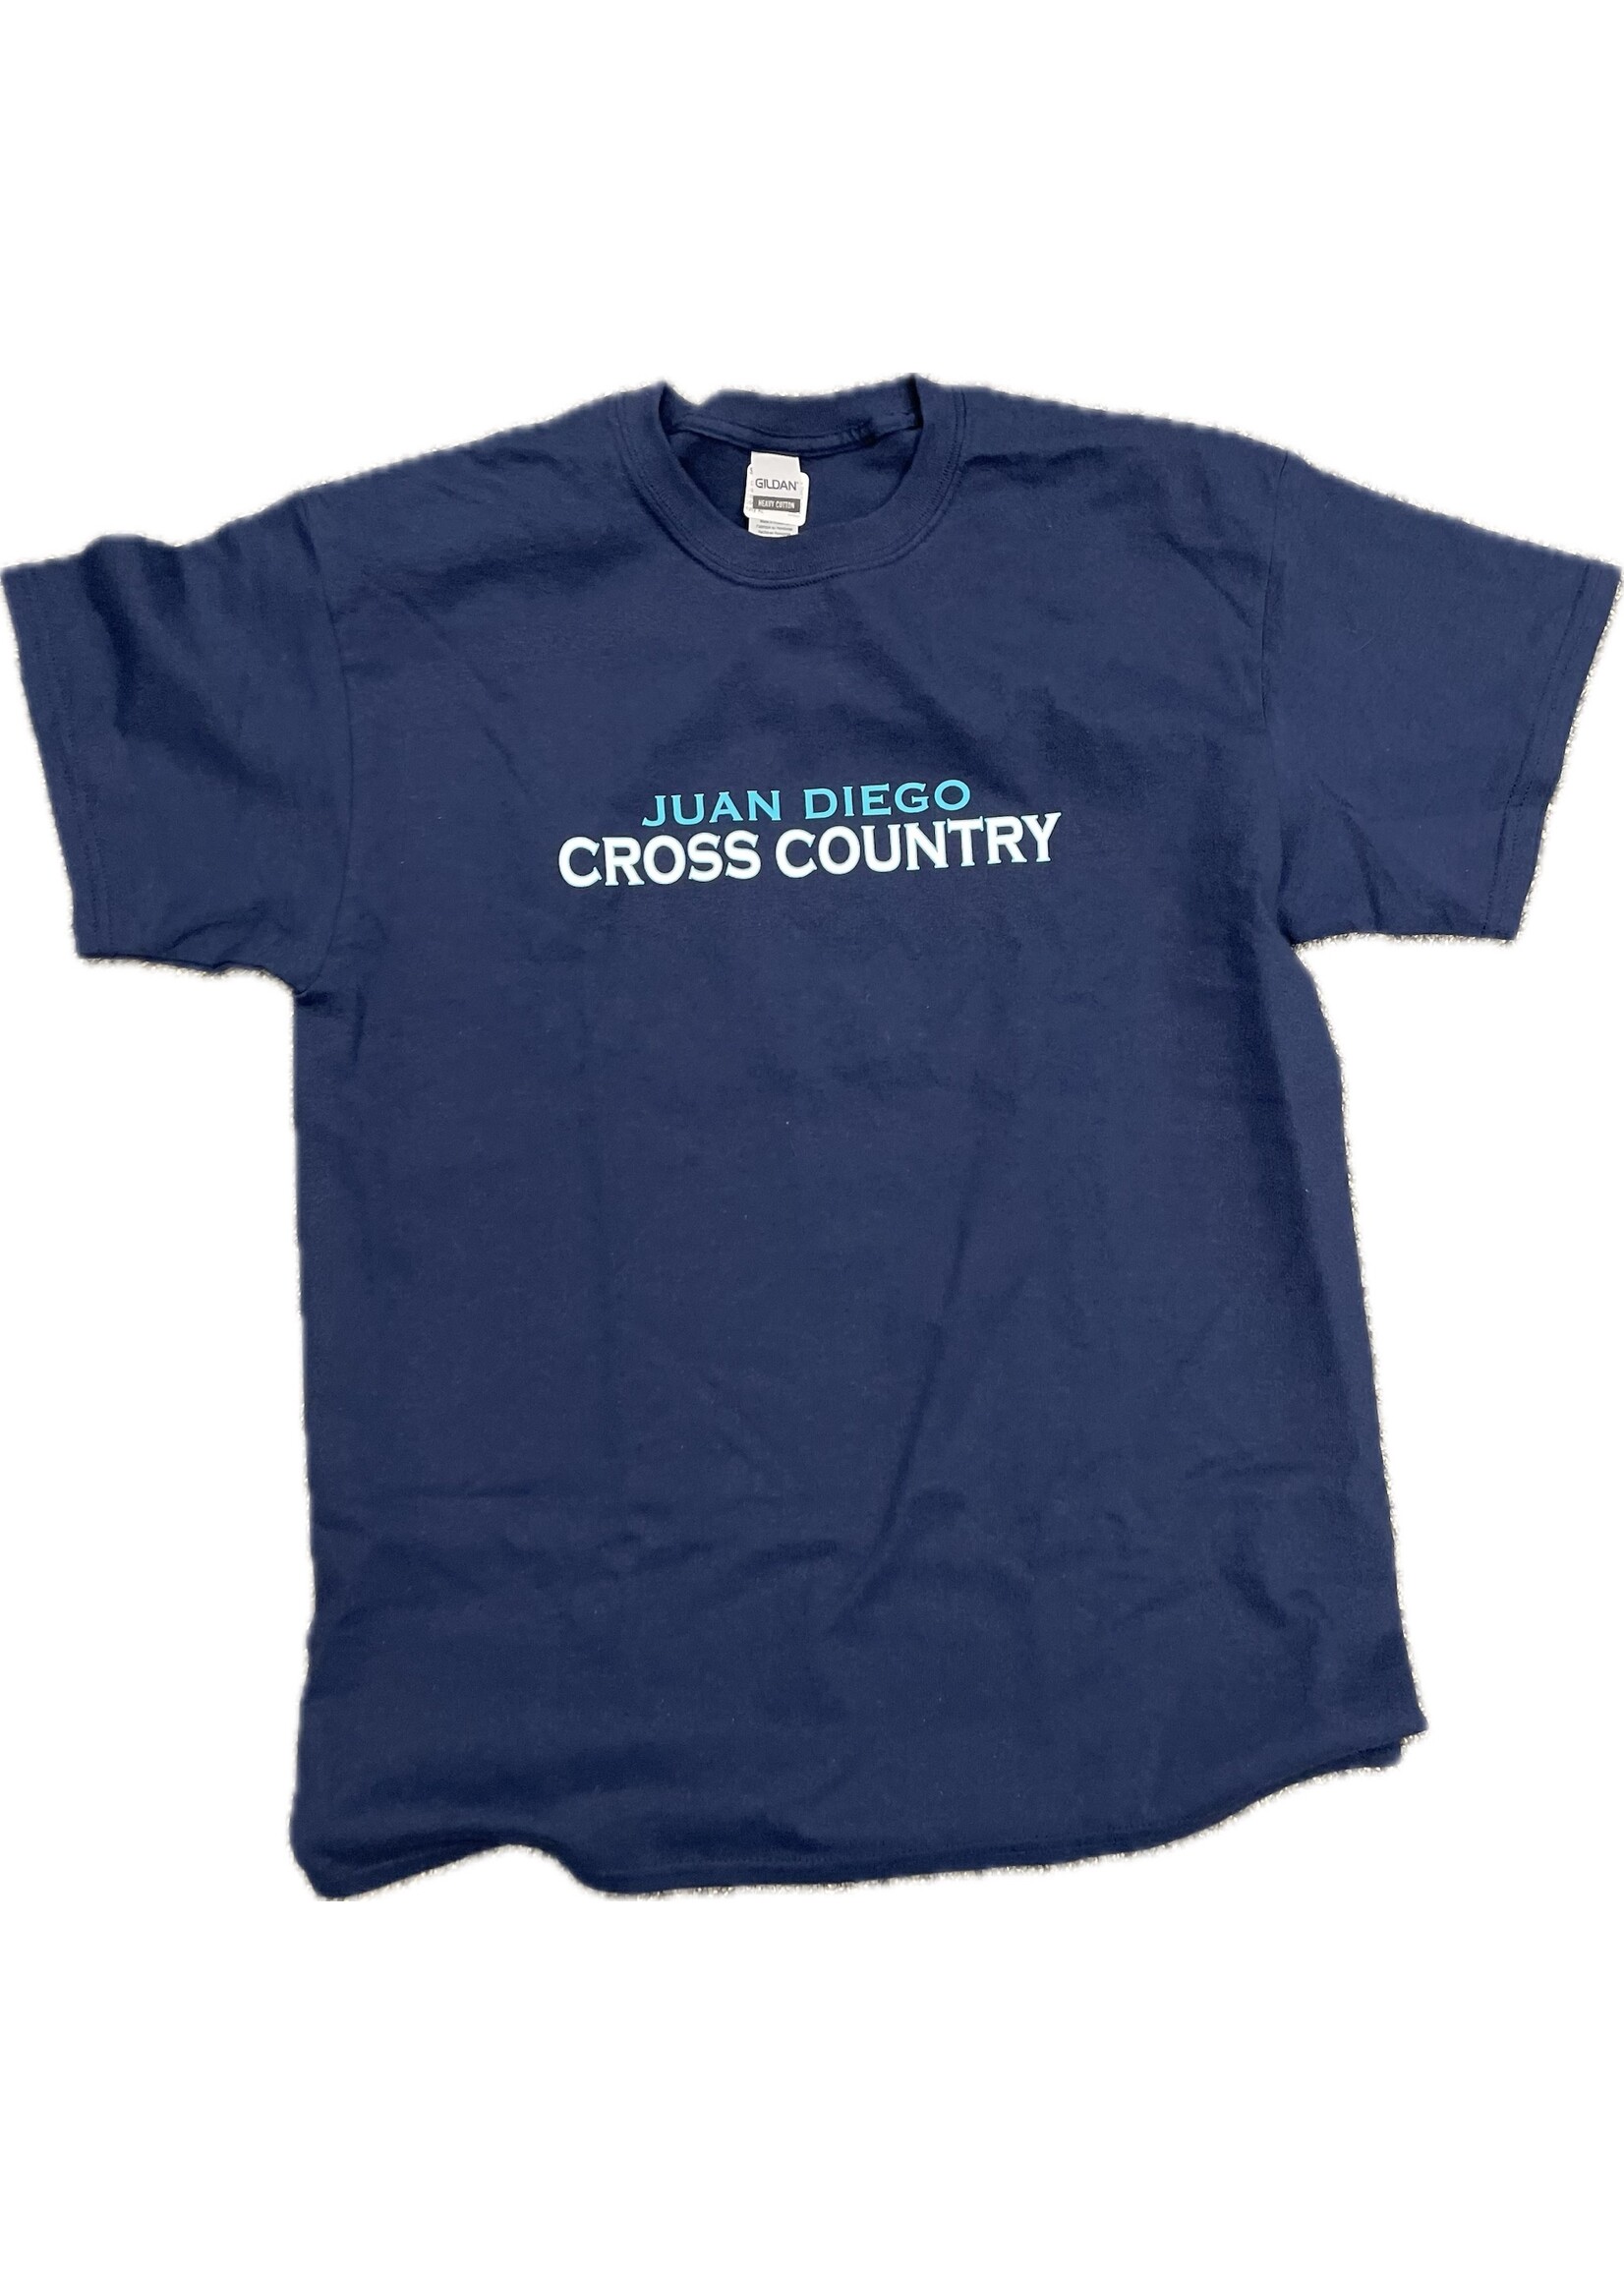 NON-UNIFORM Cross Country, Juan Diego Cross Country Custom Order Unisex S/S Shirt